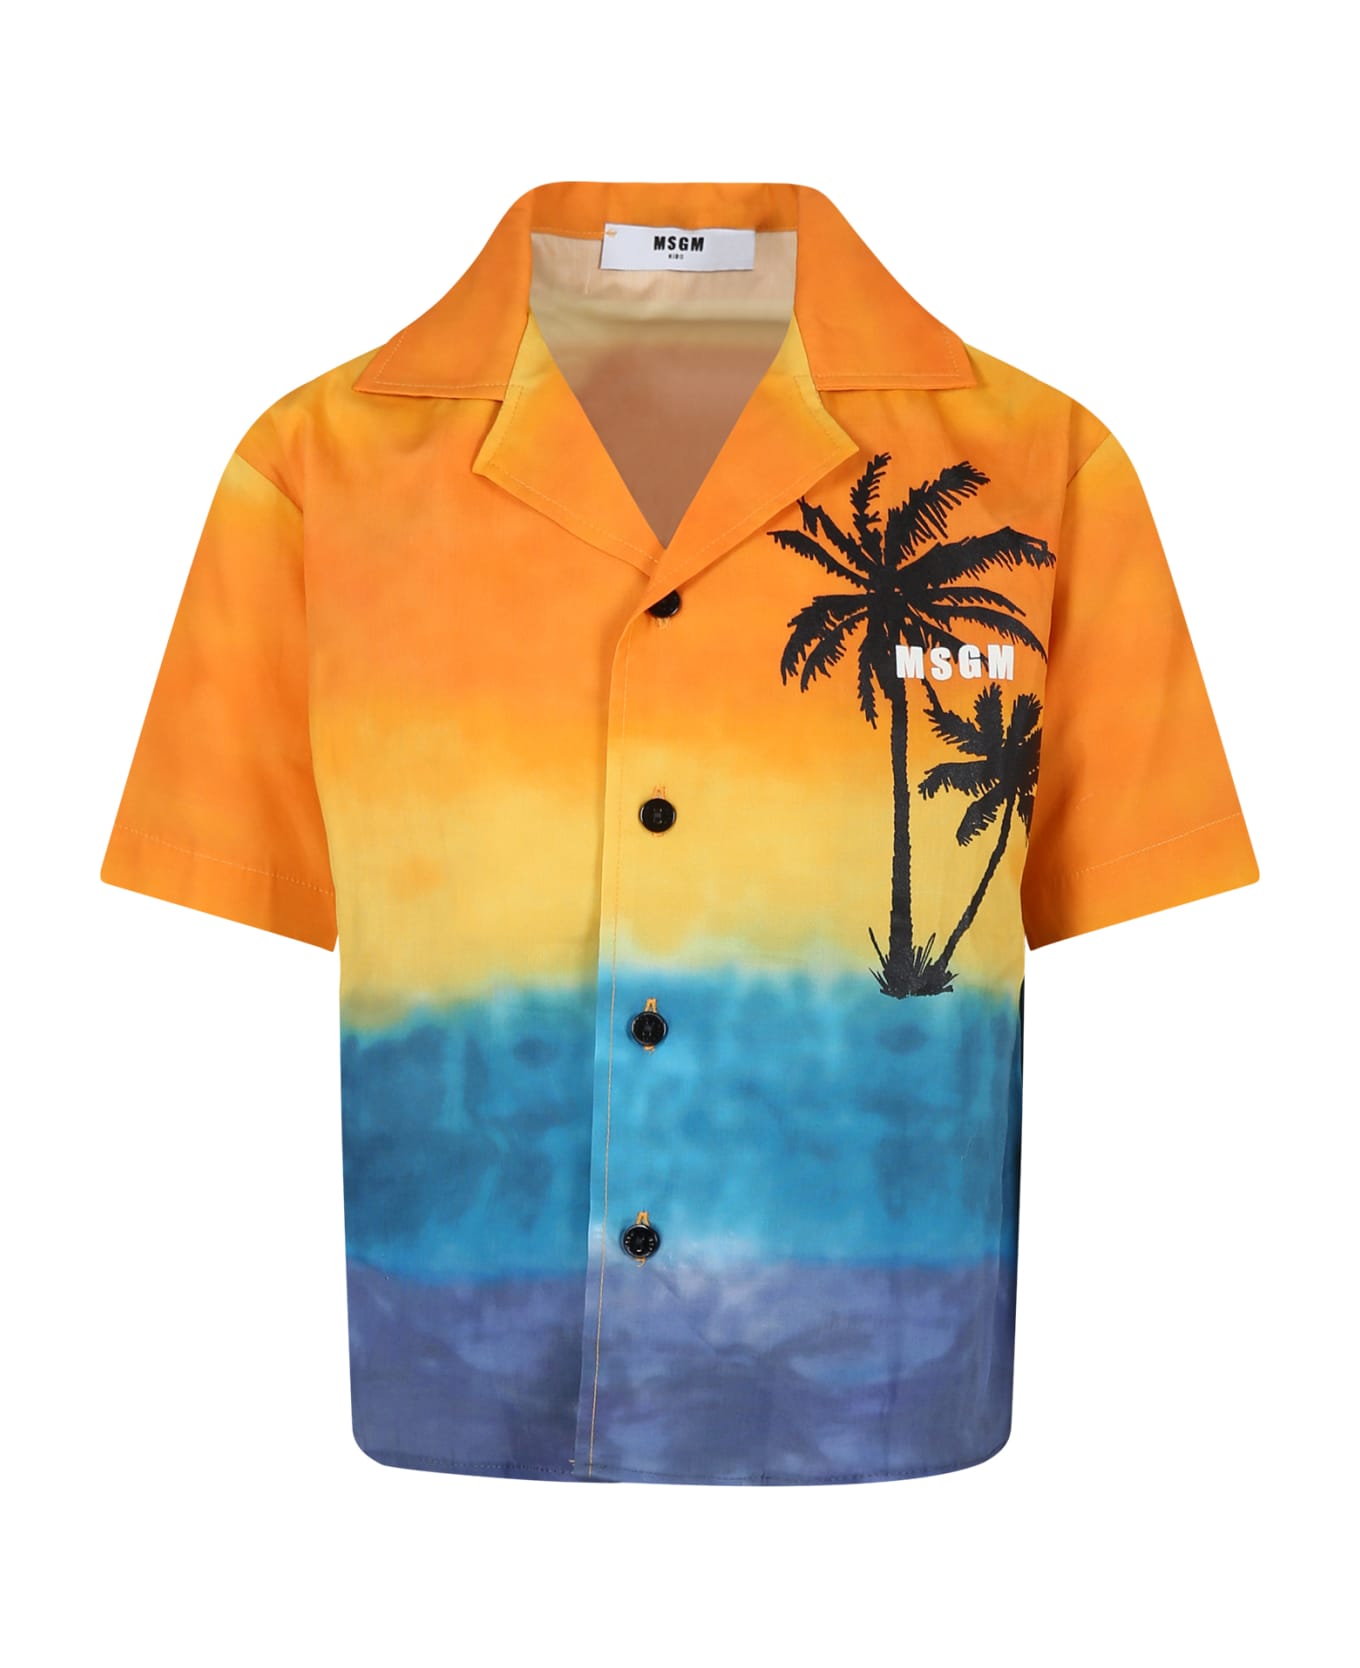 MSGM Orange Shirt For Boy With Palm Tree Print - Orange